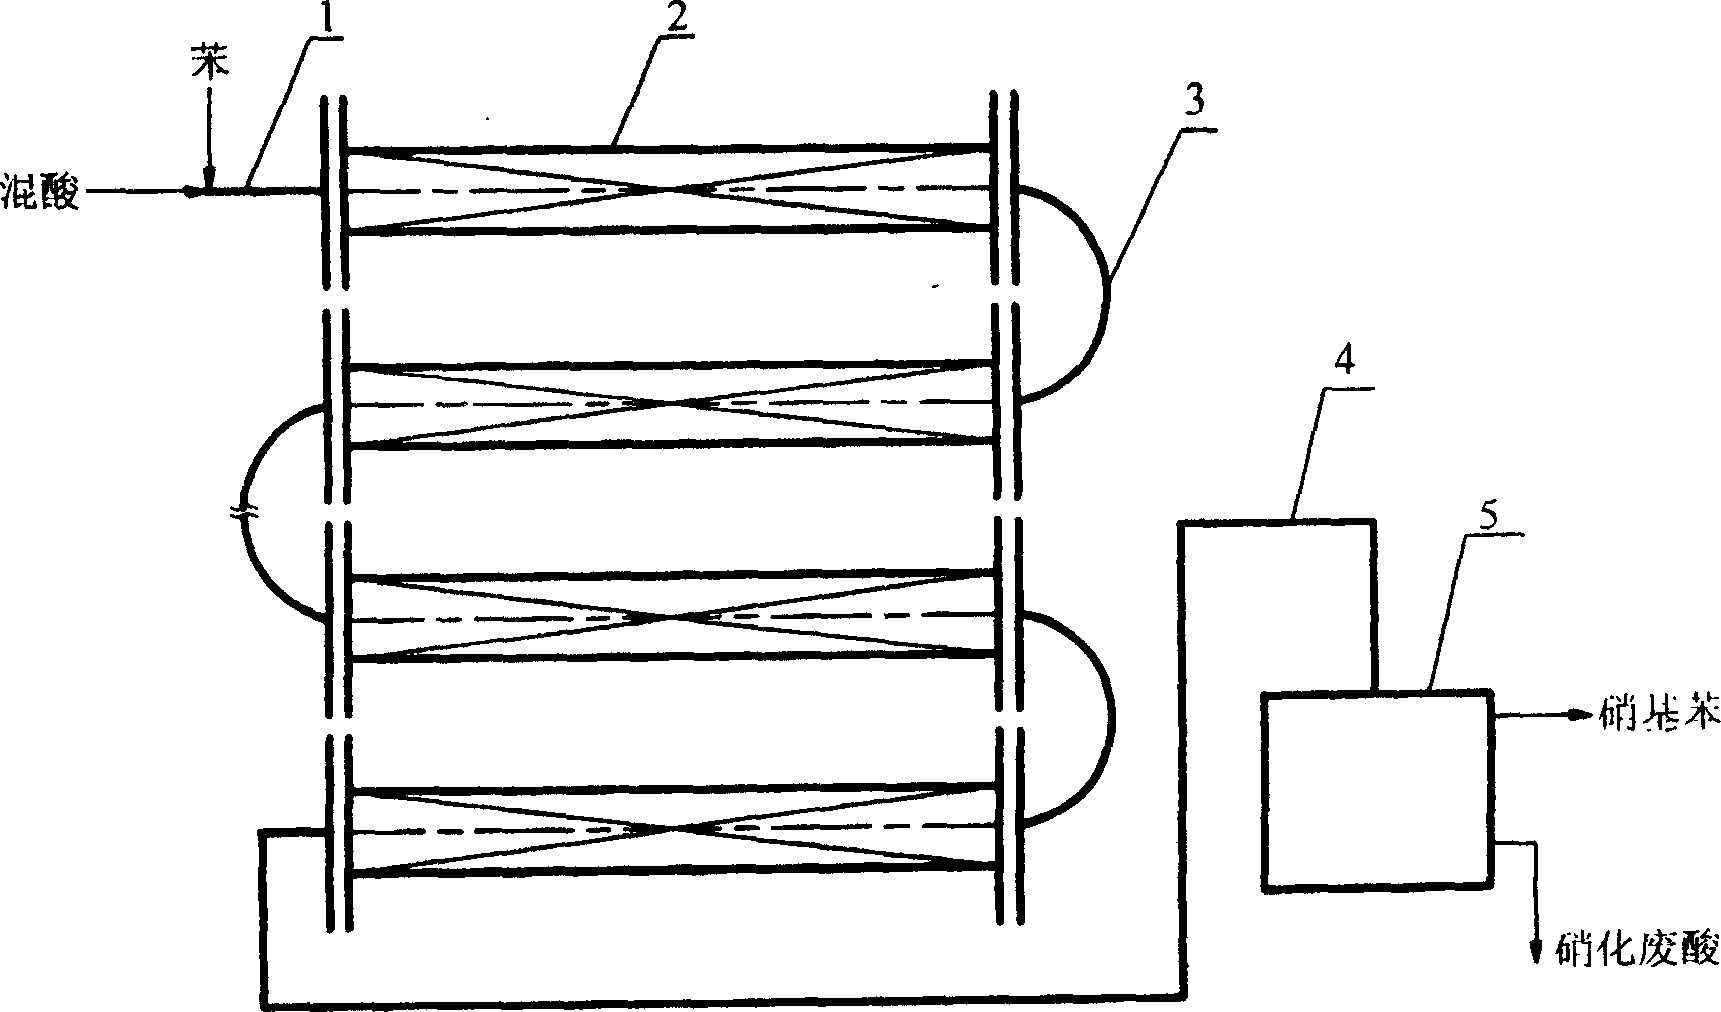 Apparatus and method for preparing nitrobenzene by nitration of tubular benzene